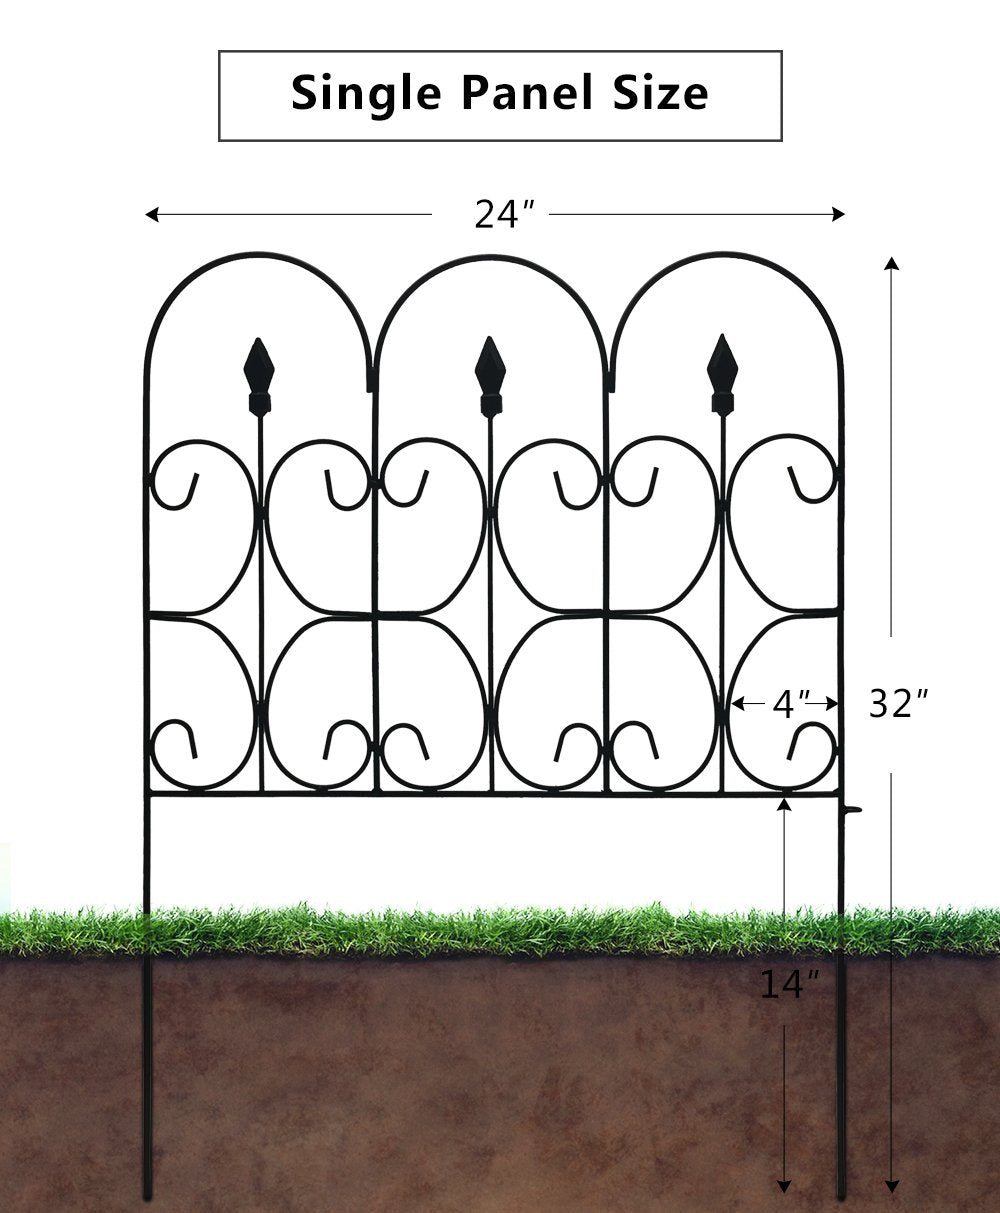 Buy Amagabeli Decorative Garden Fence - Best metal fence online